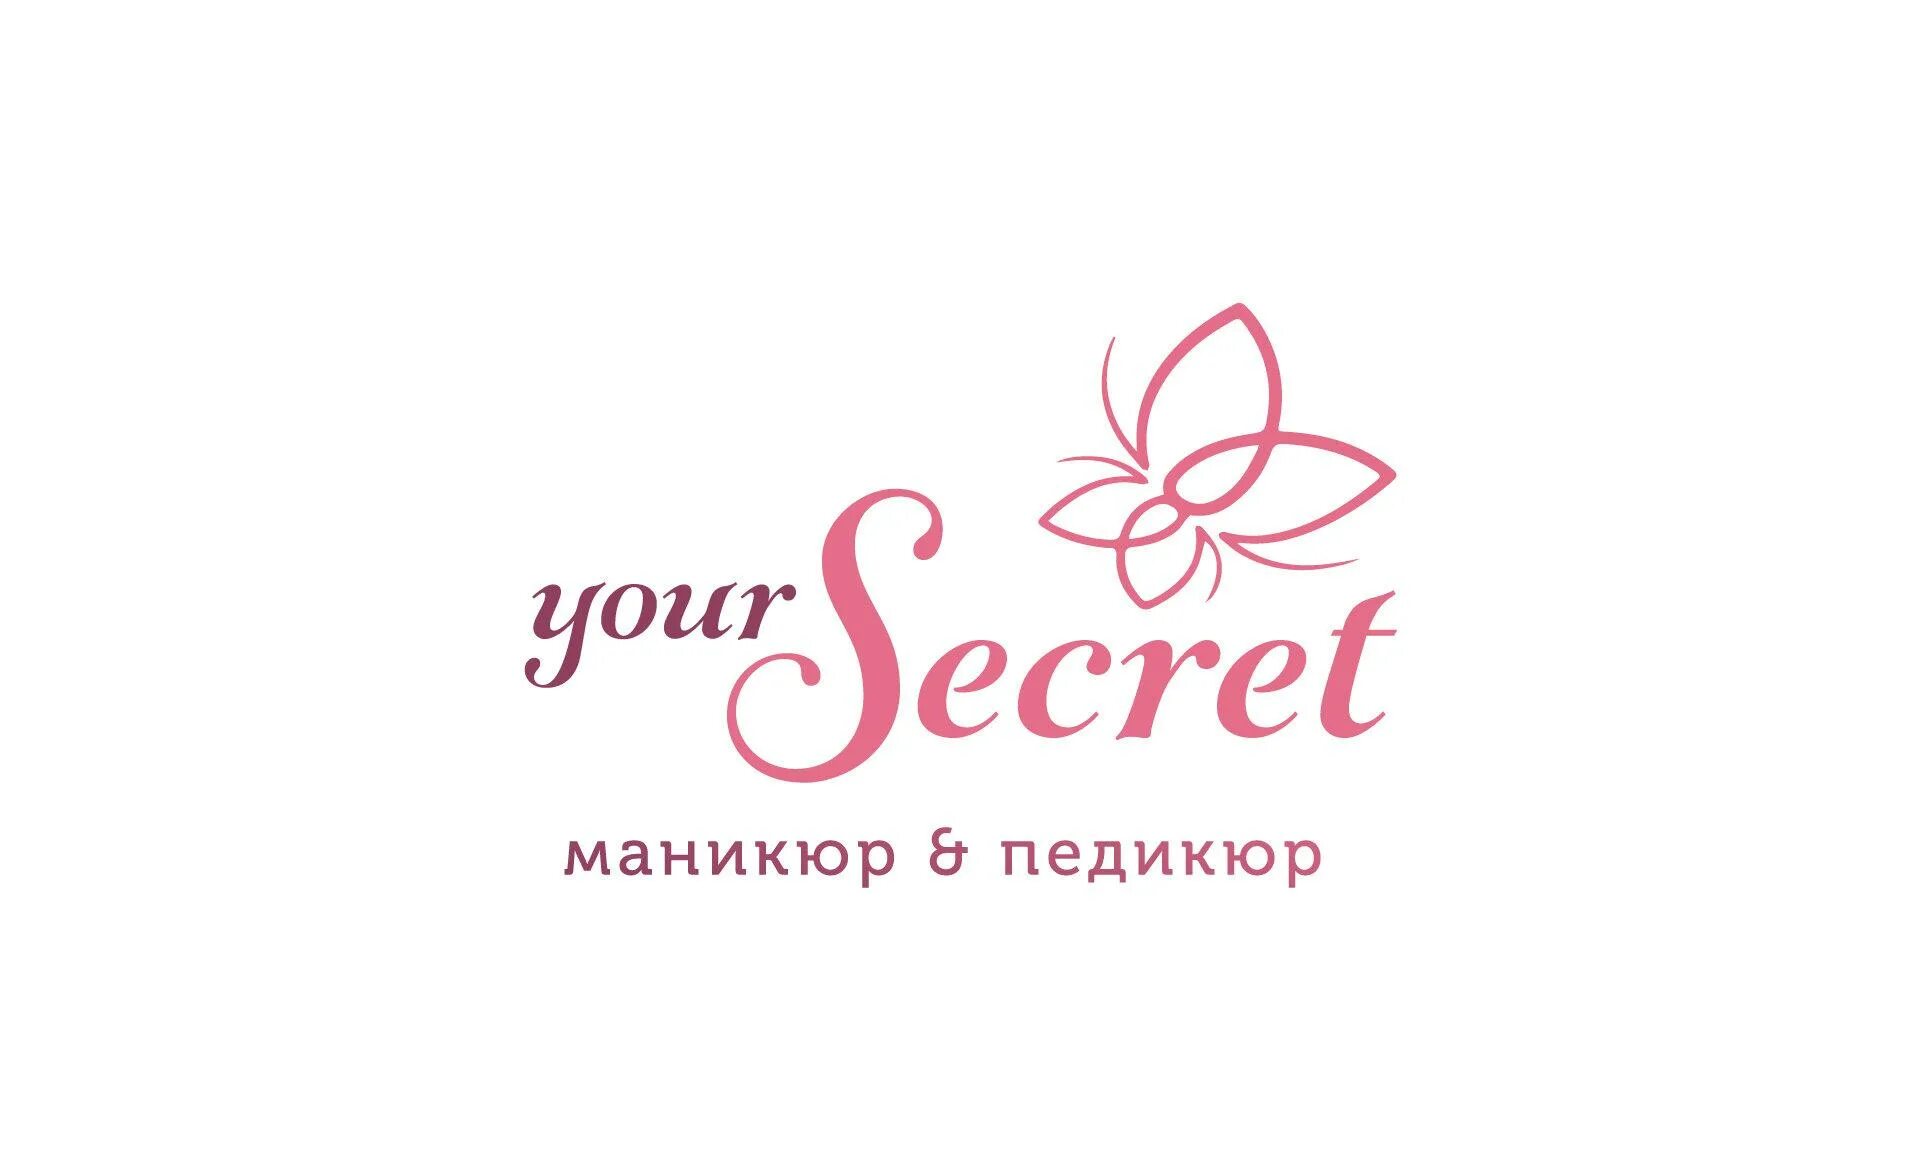 Салон секрет. Бьюти Сикрет Москва салон. Прайс маникюрного салона. Салон красоты секрет москва